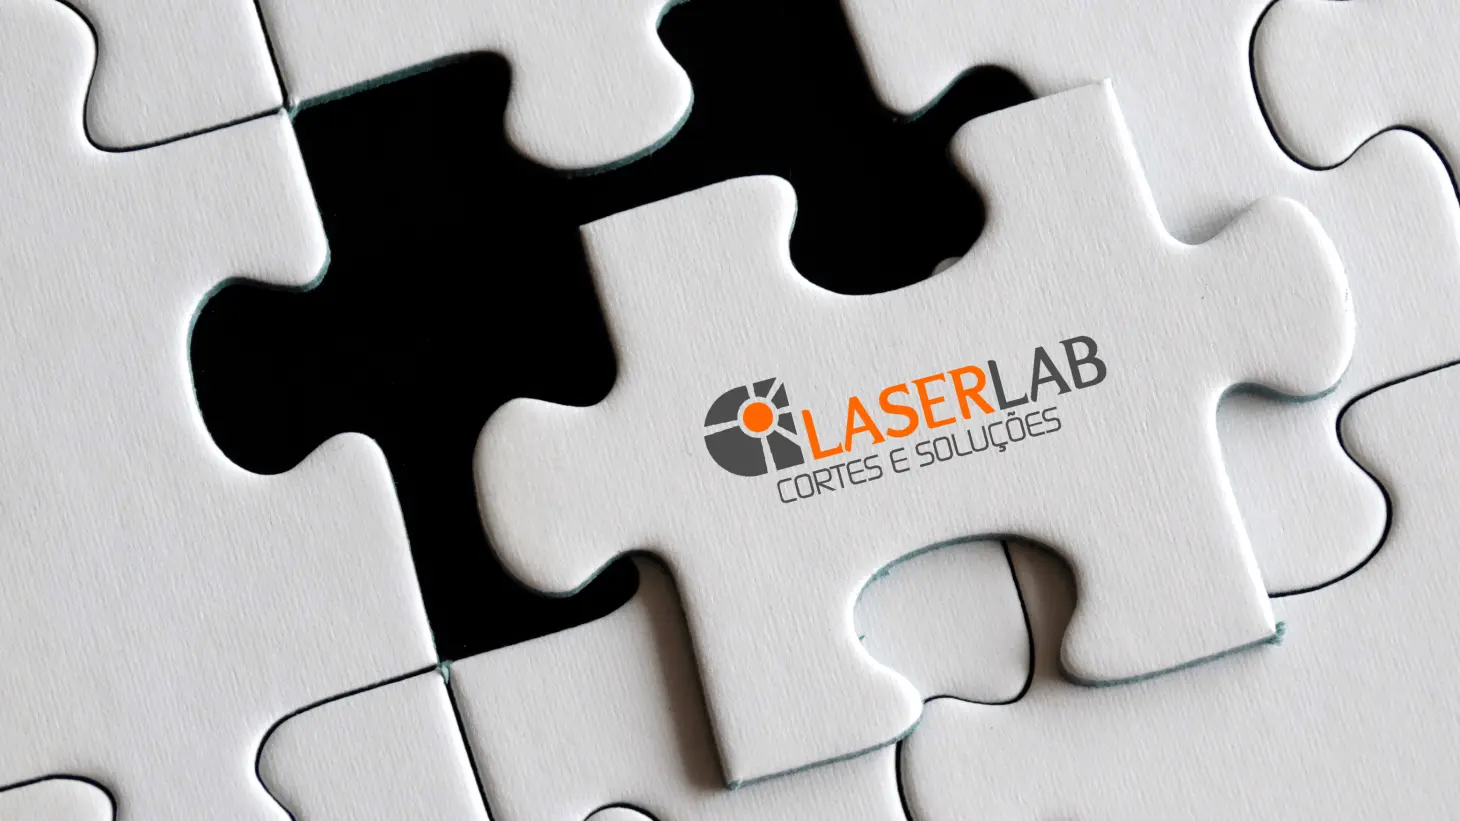 Laserlab - Quem Somos